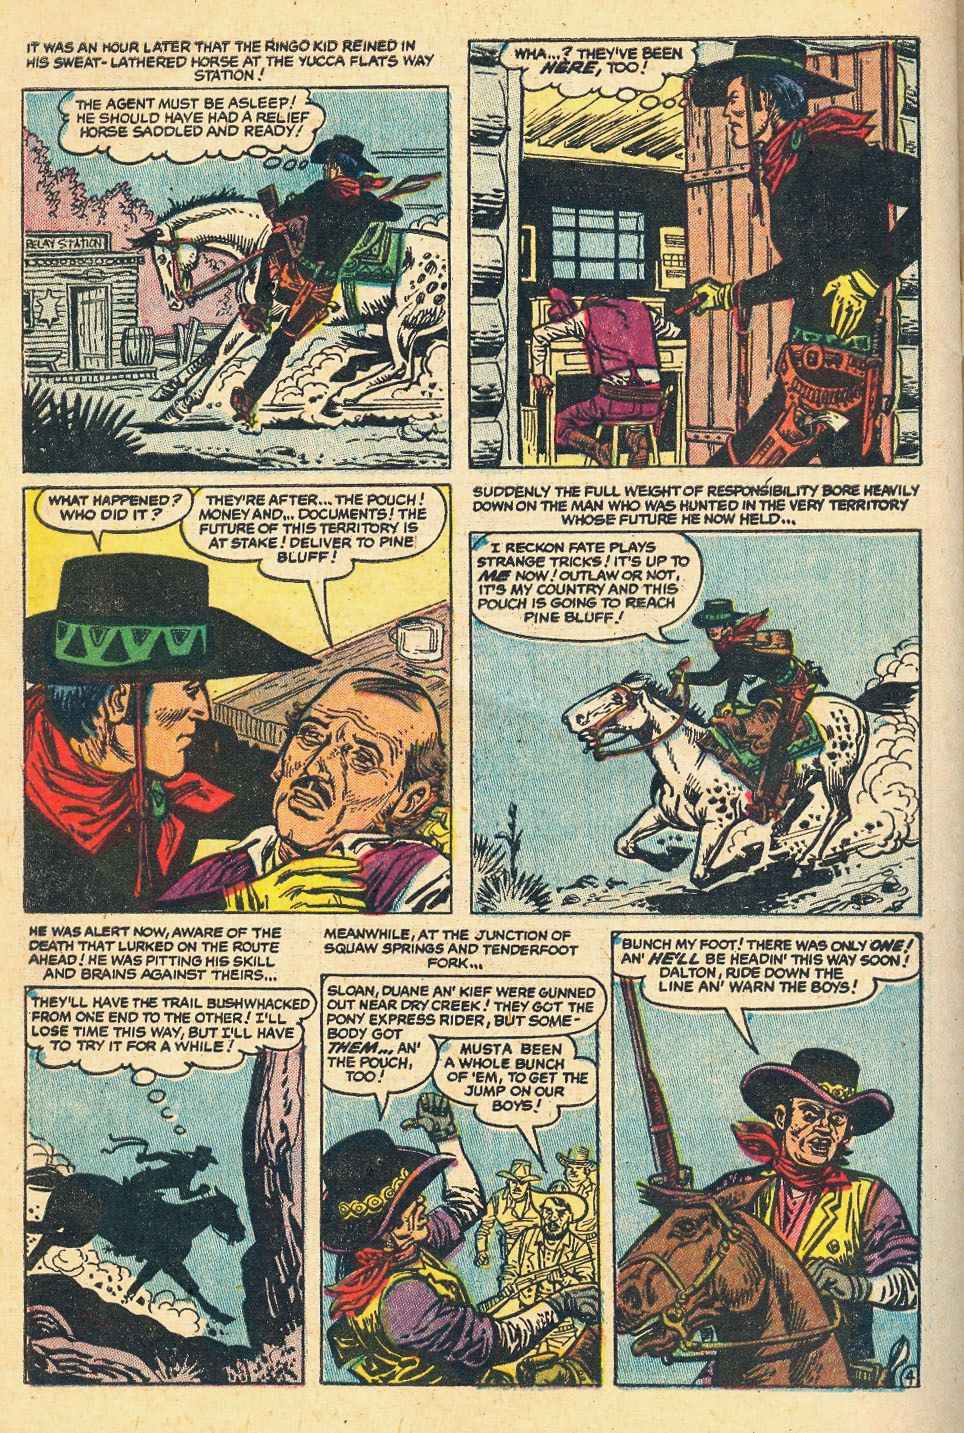 Read online Ringo Kid Western comic -  Issue #1 - 30